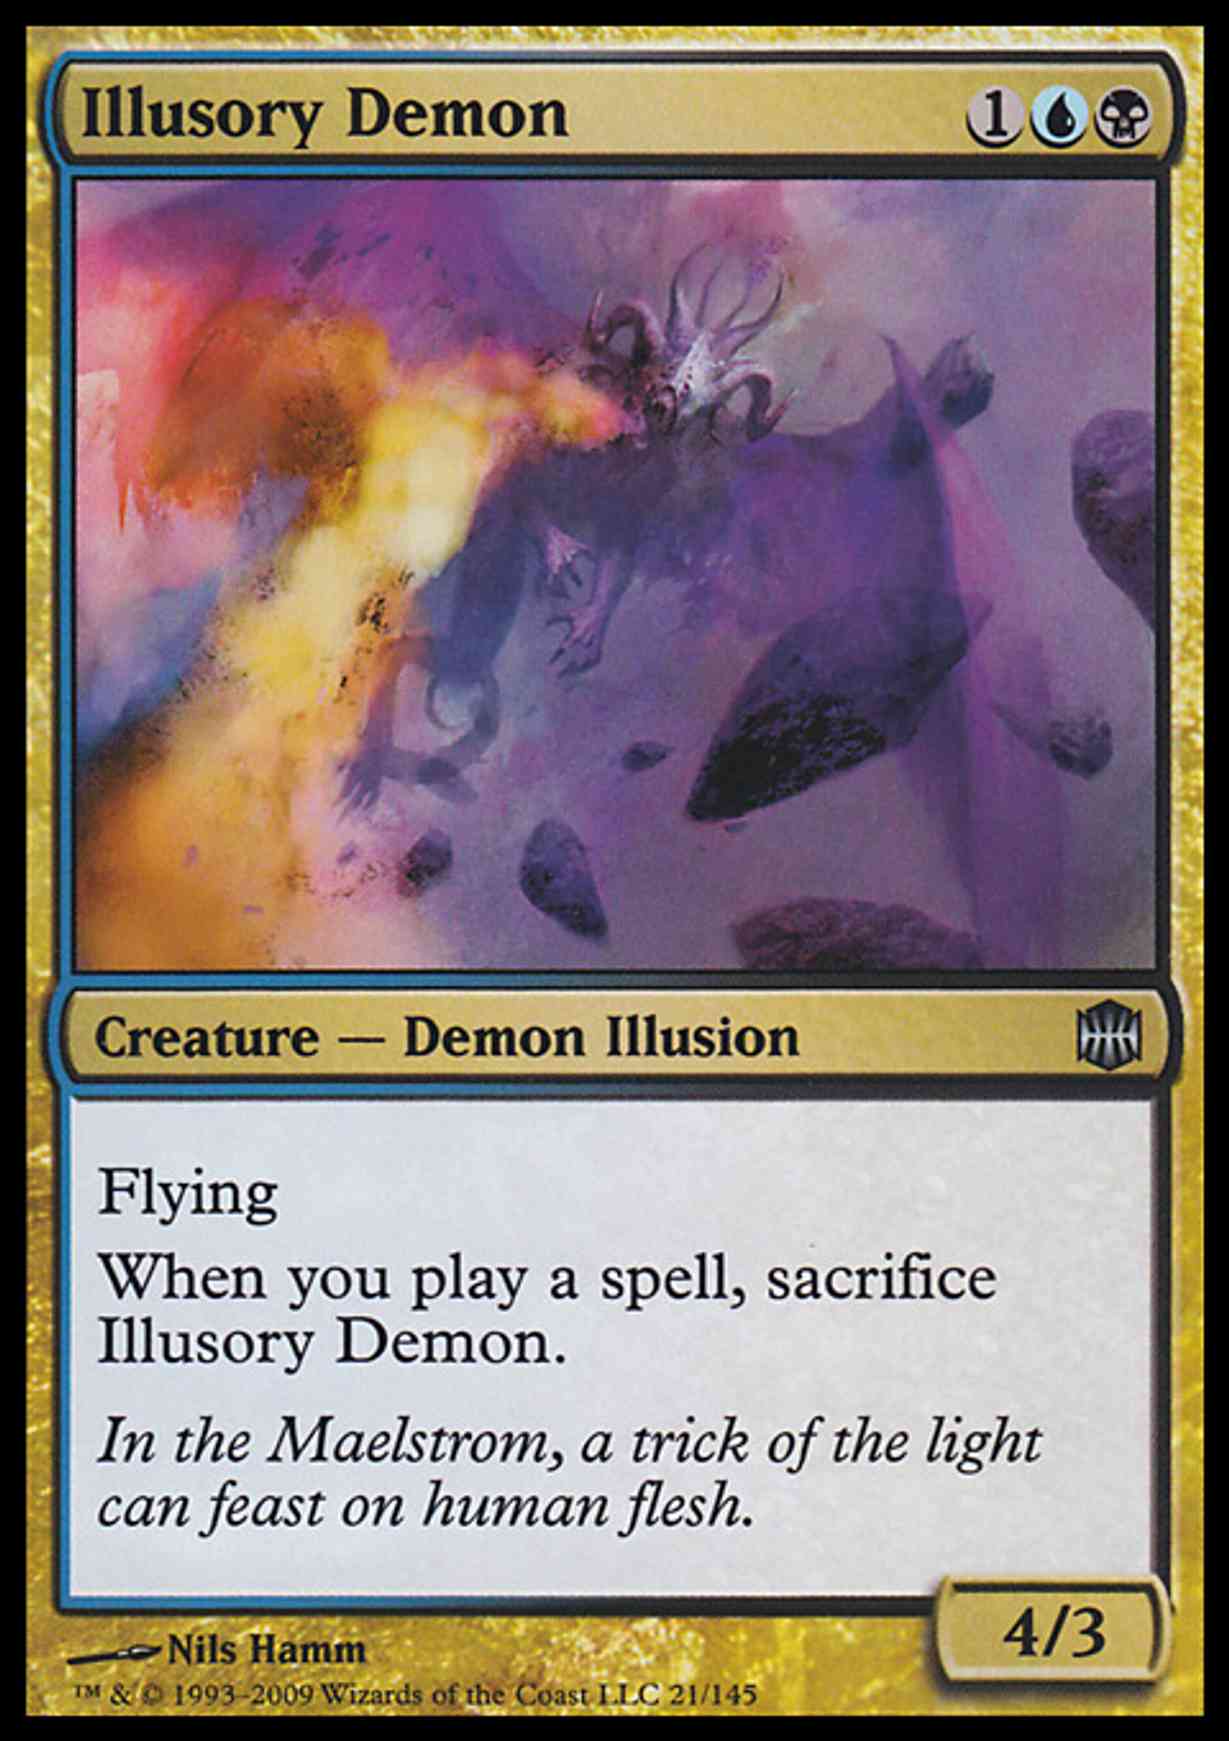 Illusory Demon magic card front